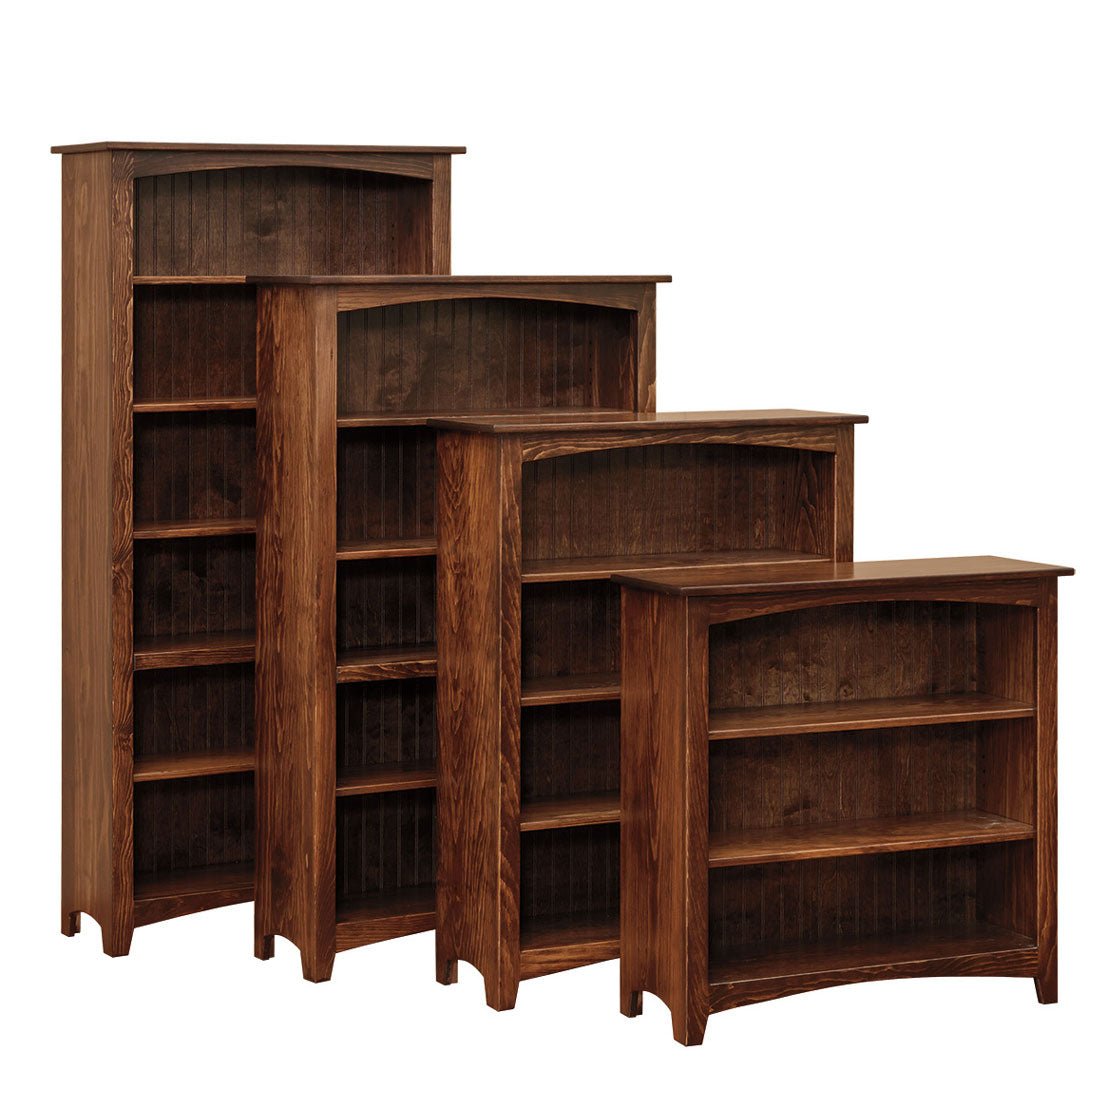 FR Bookcase - snyders.furniture